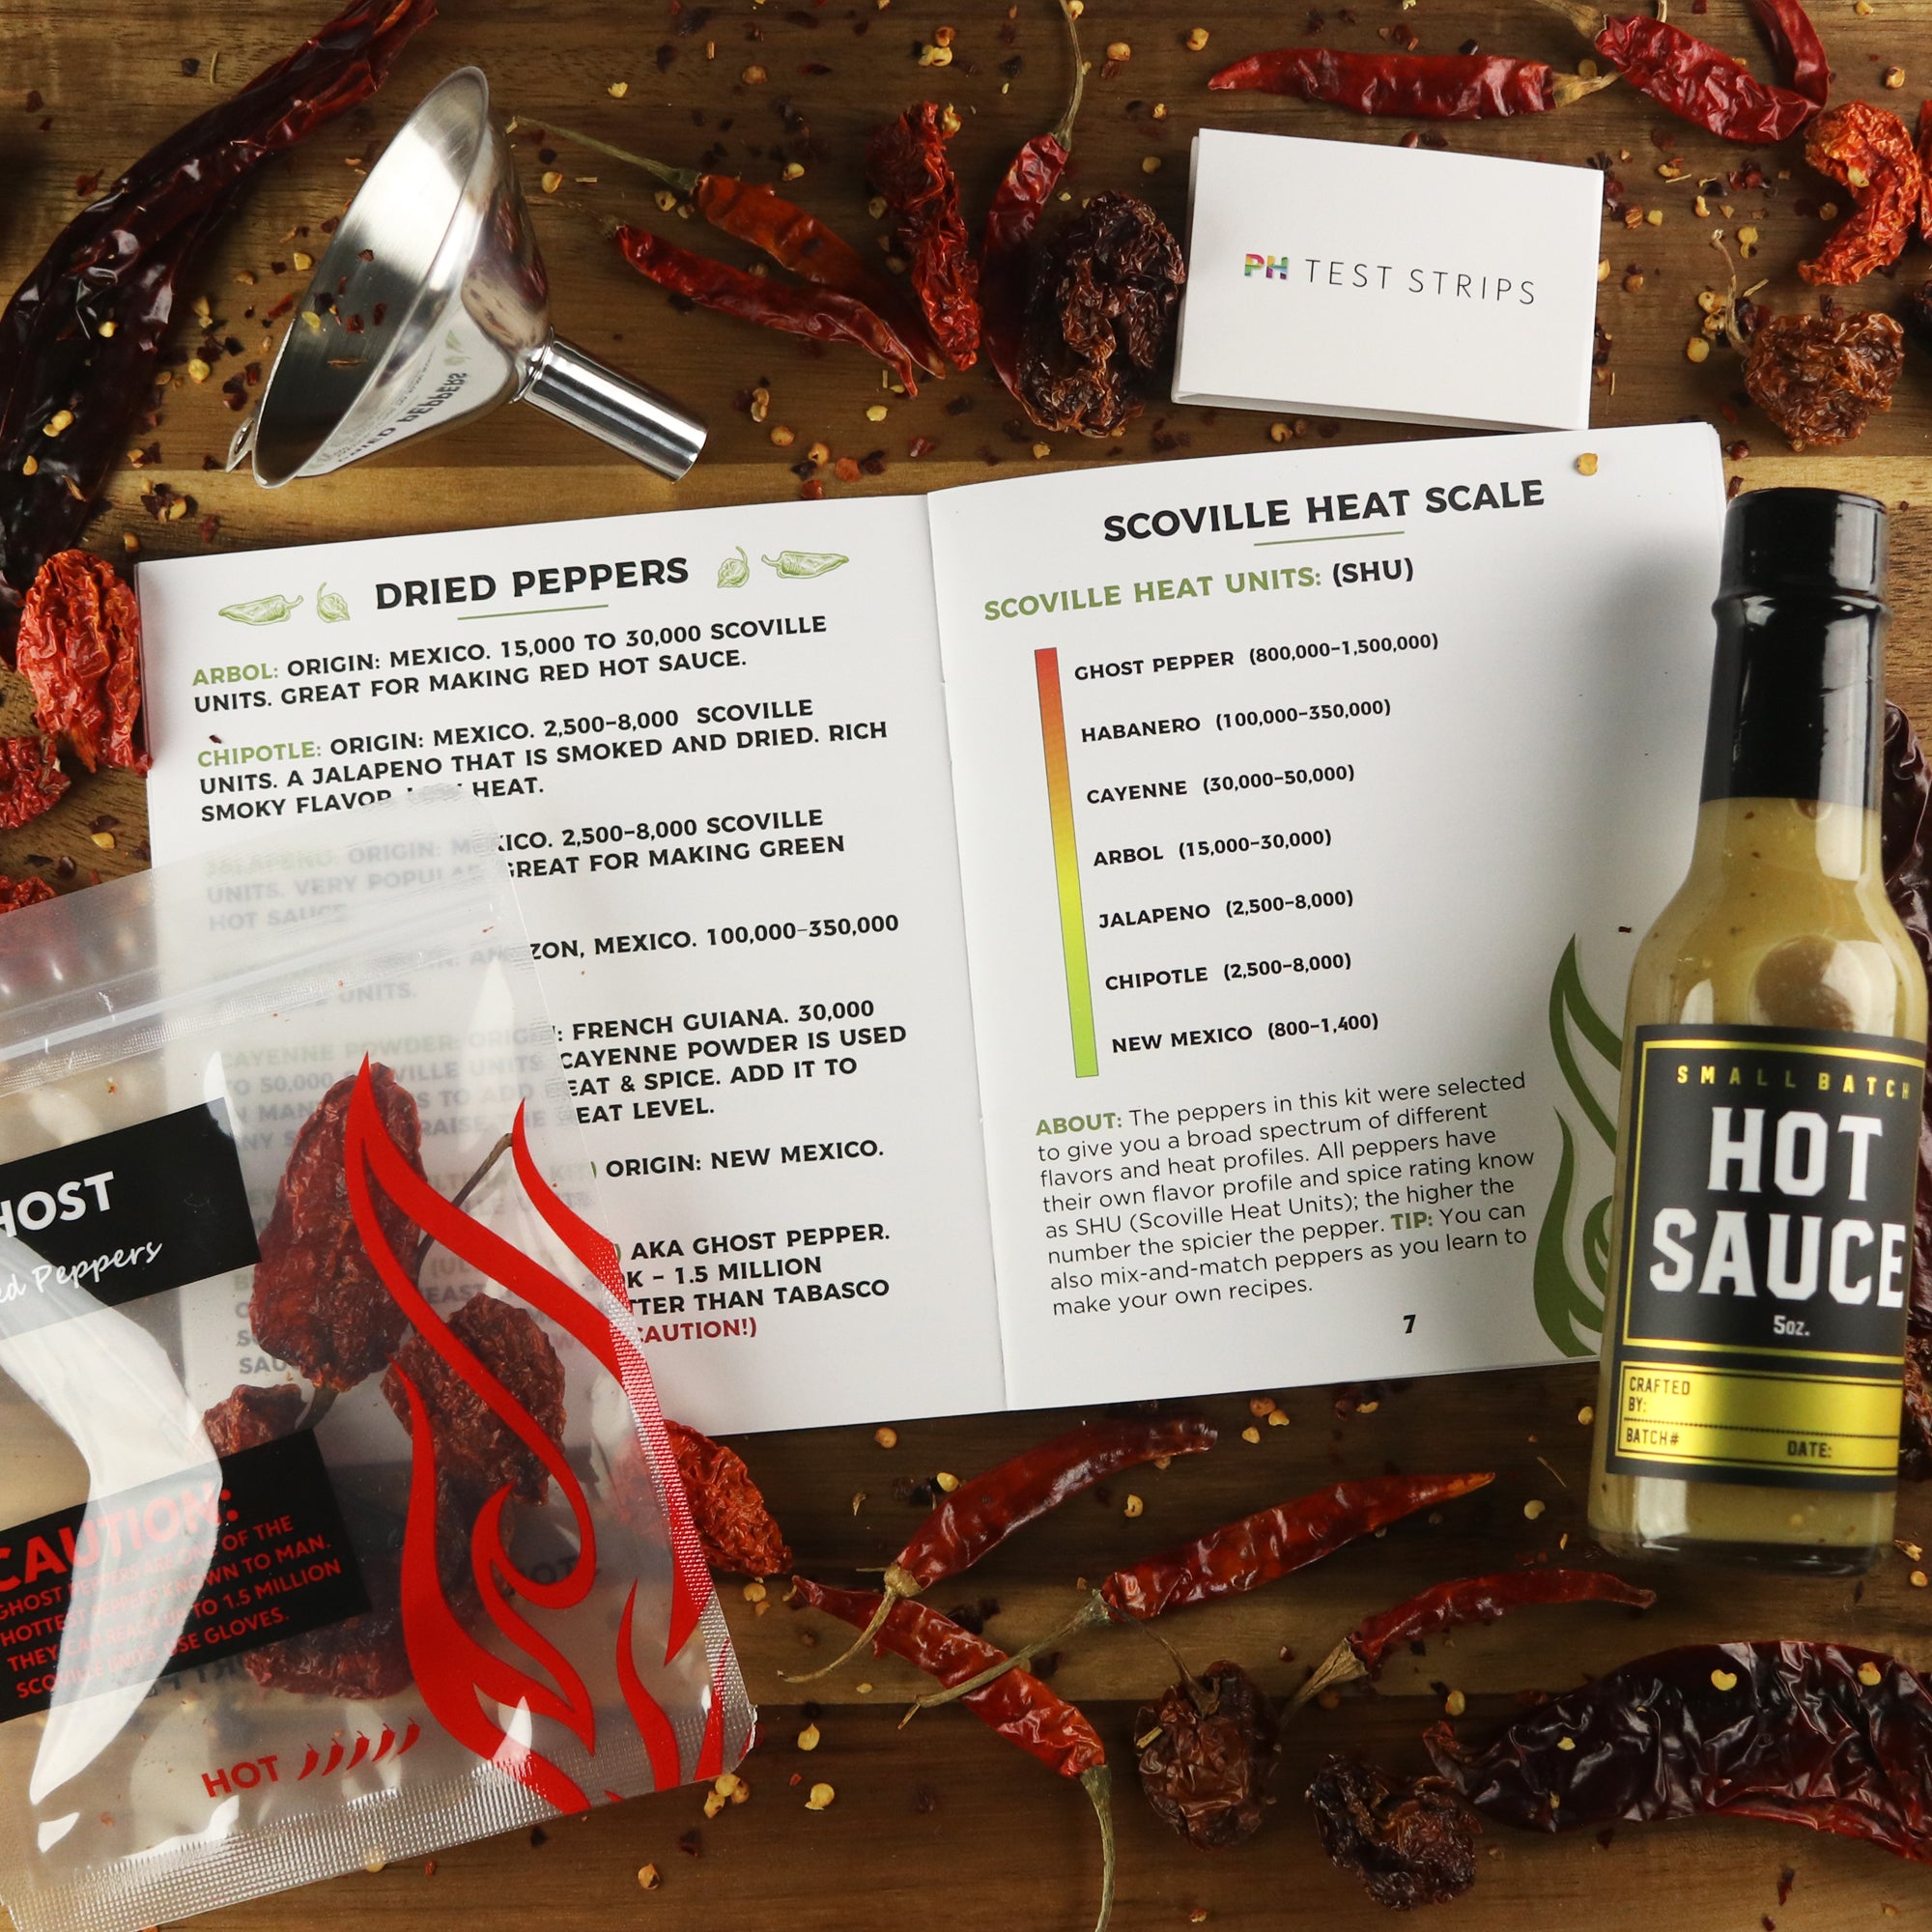 Super Hot Carolina Reaper DIY Hot Sauce Making Kit, 5 Peppers, 4 Bottles,  Makes up to 14 Gourmet Bottles (Premium Kit) – Craft & Provisions